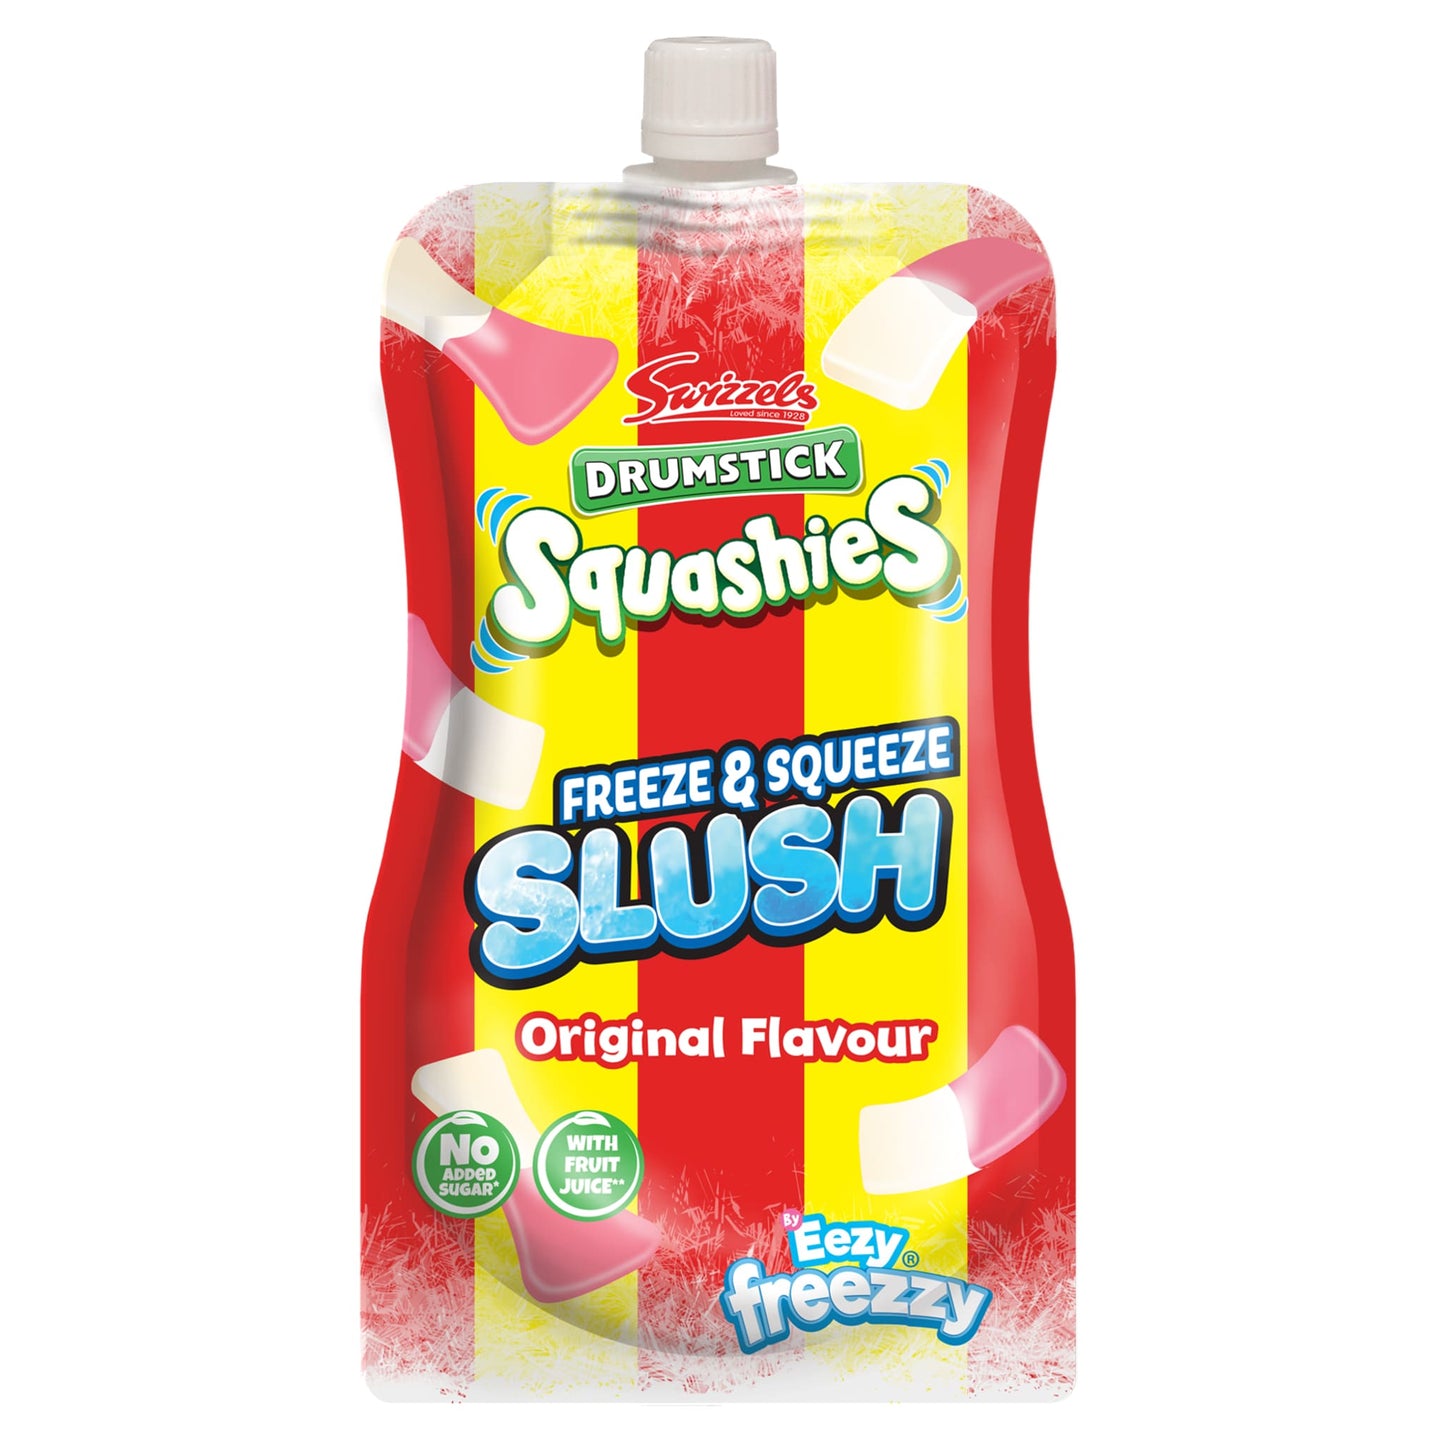 Swizzels Drumstick Squashies Original Flavour Slush | 250ml